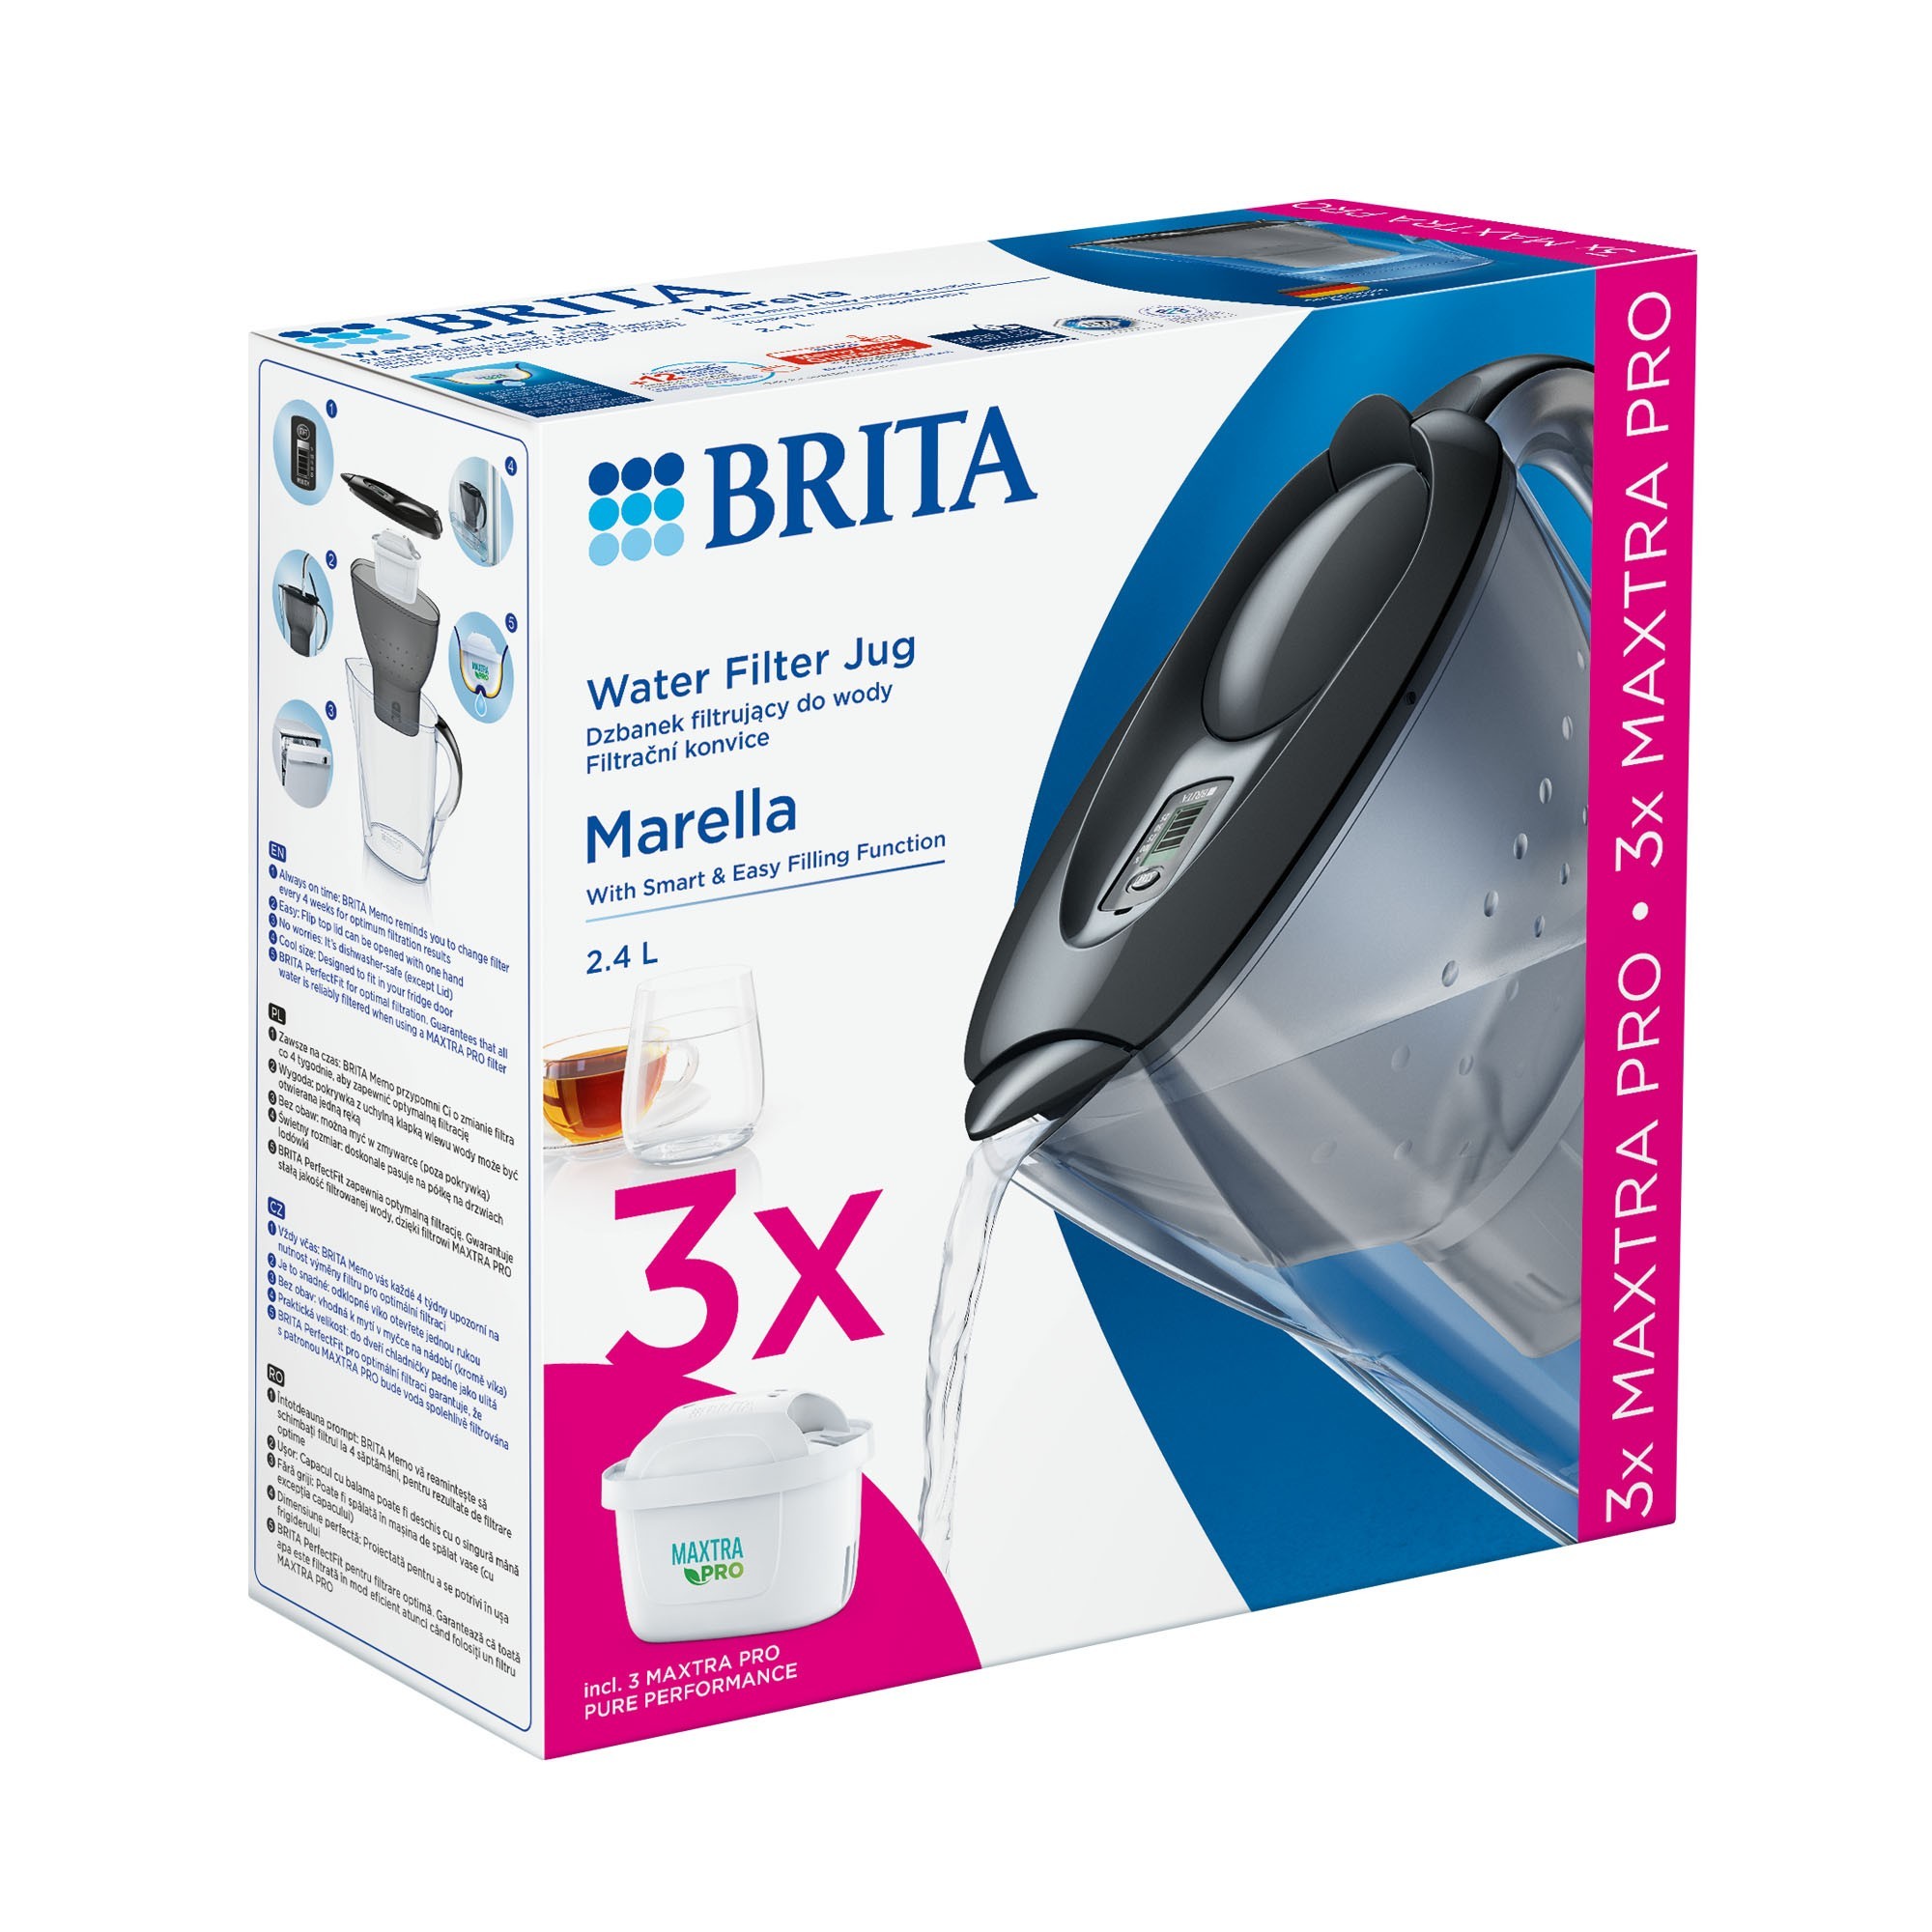 Starter pack BRITA Marella 2.4 L + 3 Maxtra+ filters